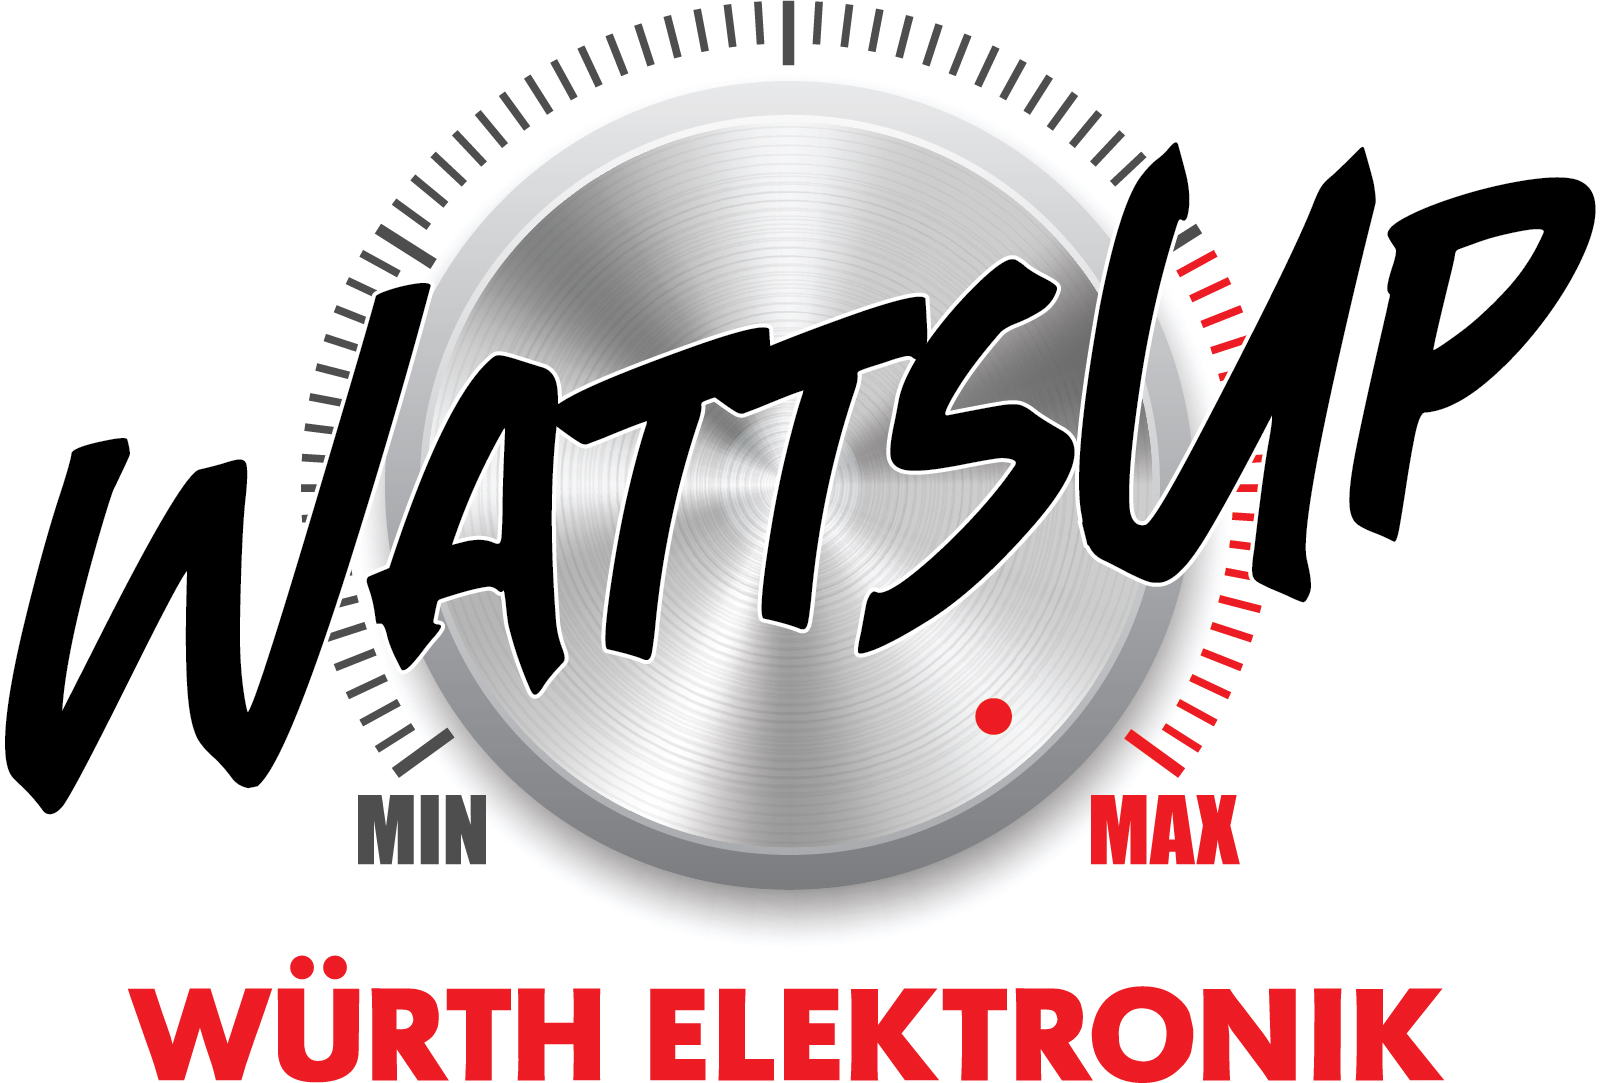 Würth Elektronik Launches New Technical Podcast